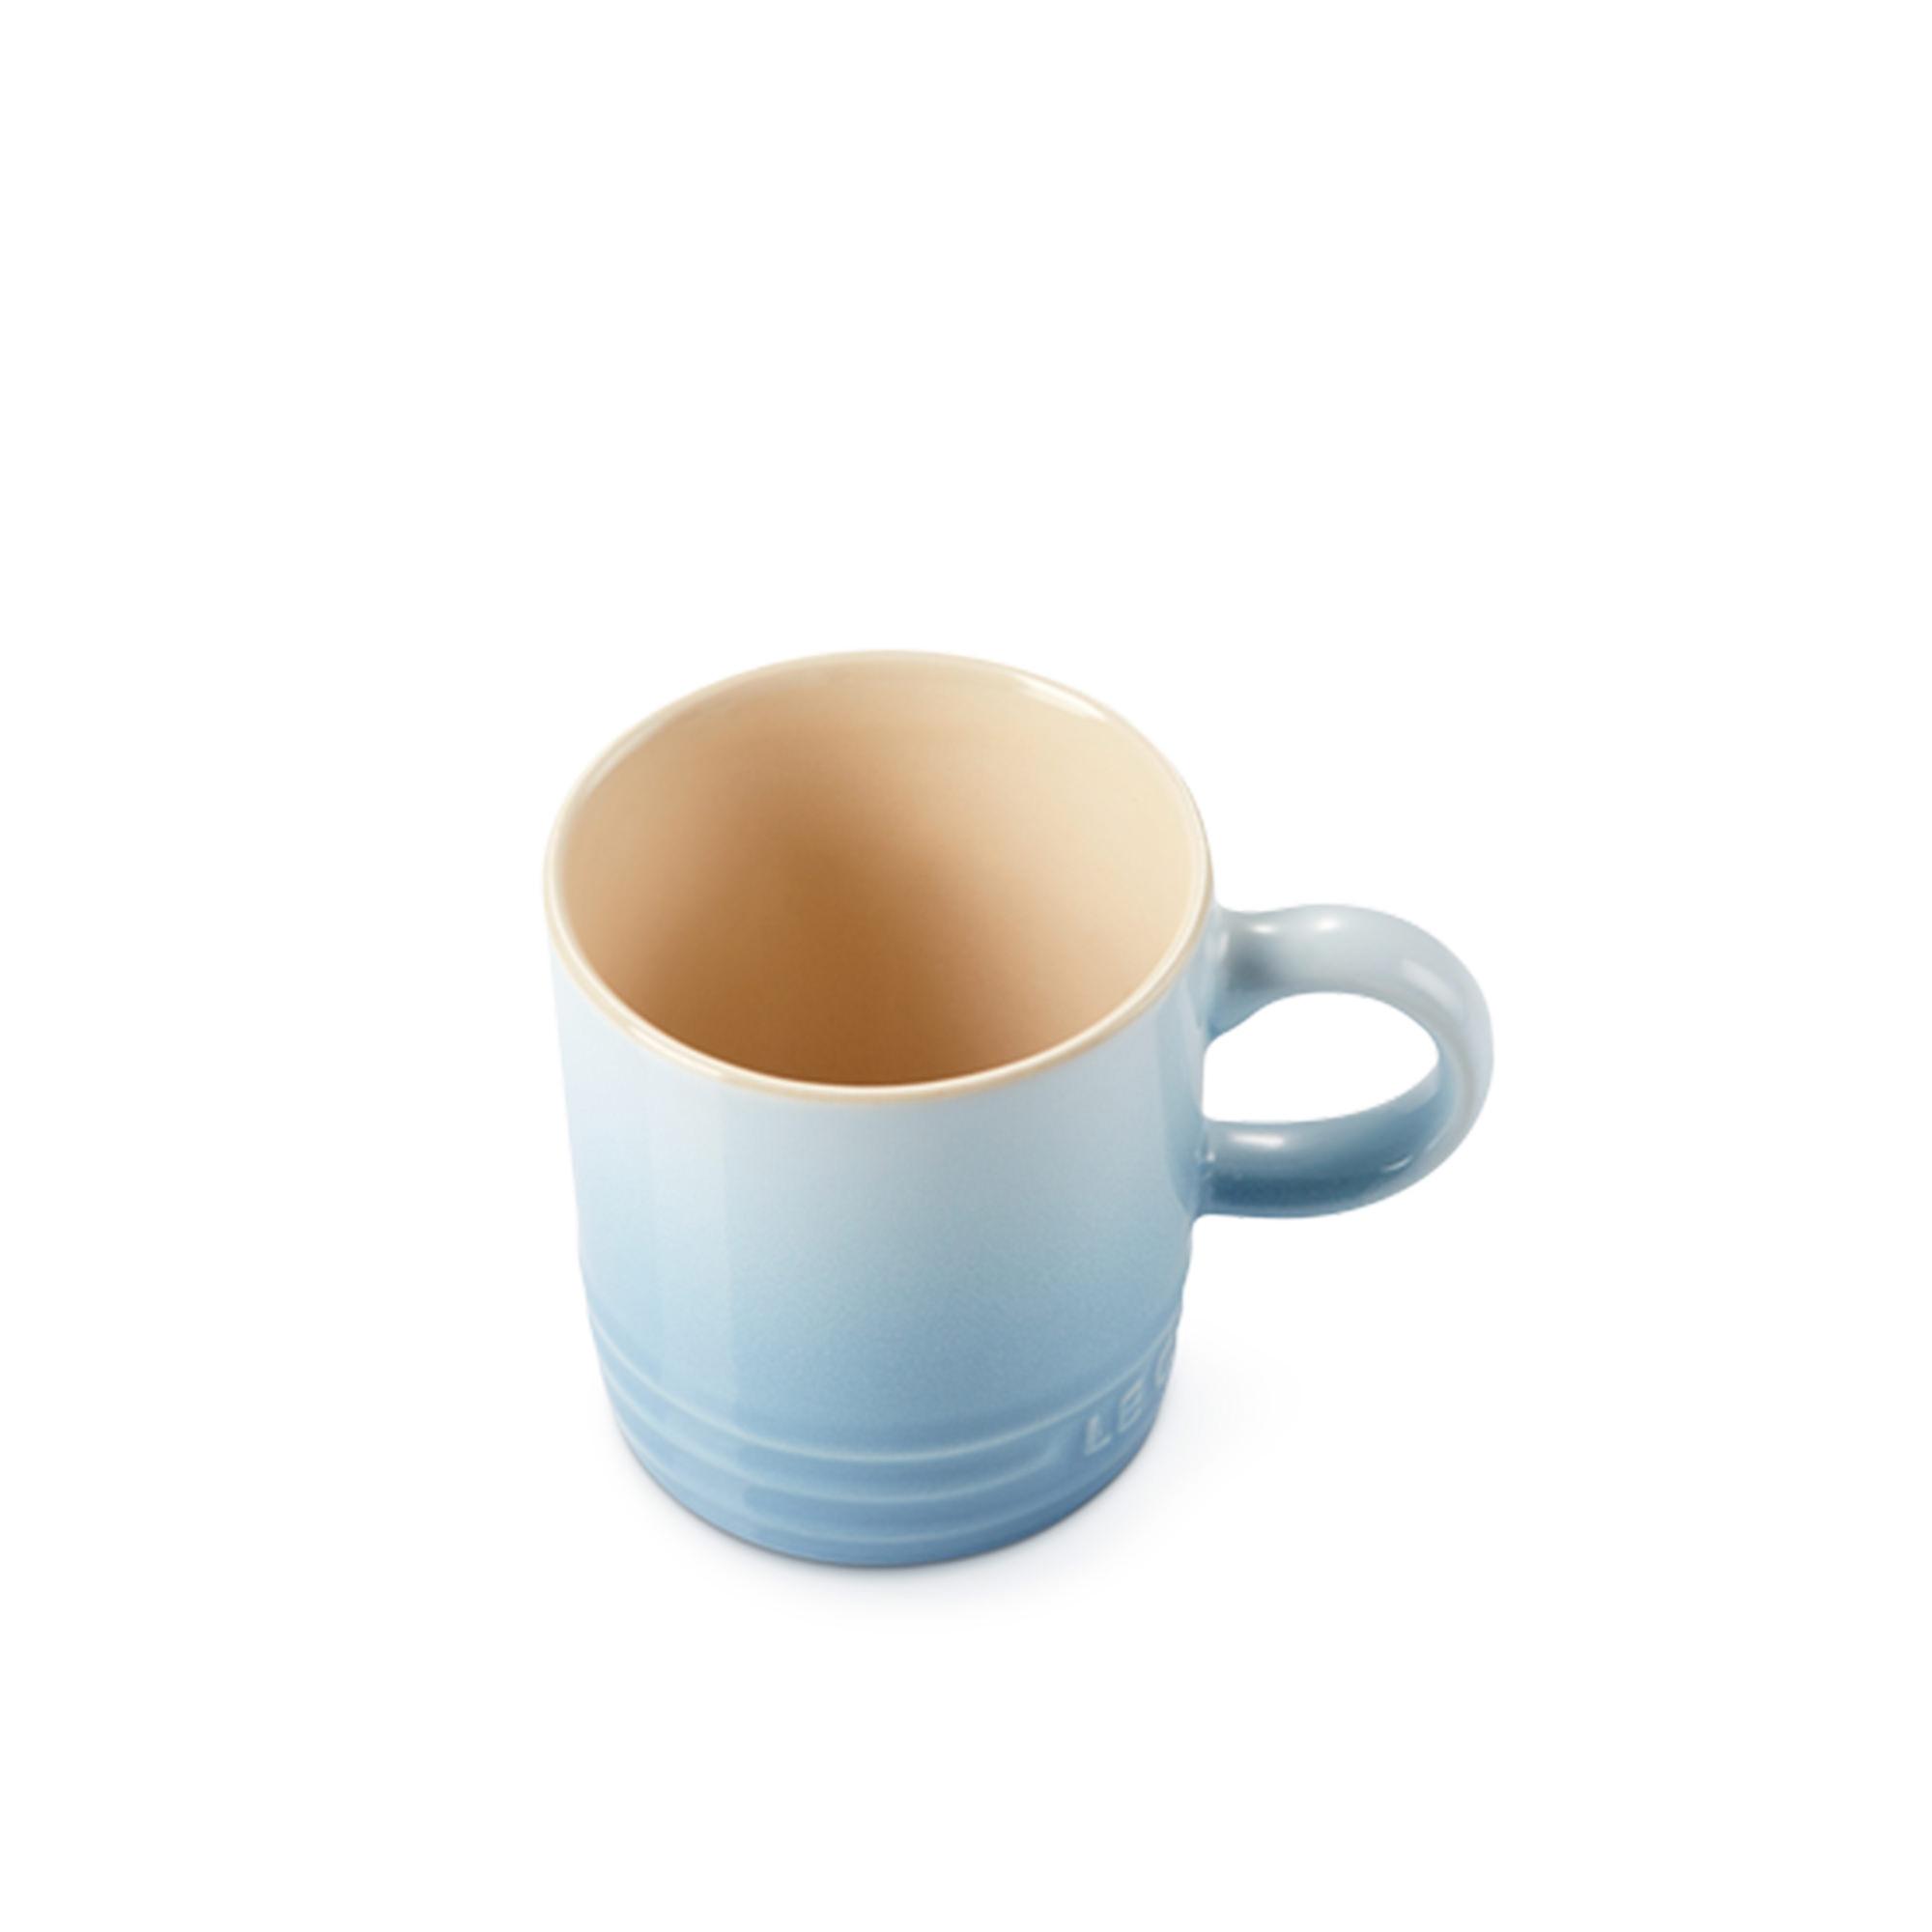 Le Creuset Stoneware Espresso Mug 100ml Coastal Blue Image 2